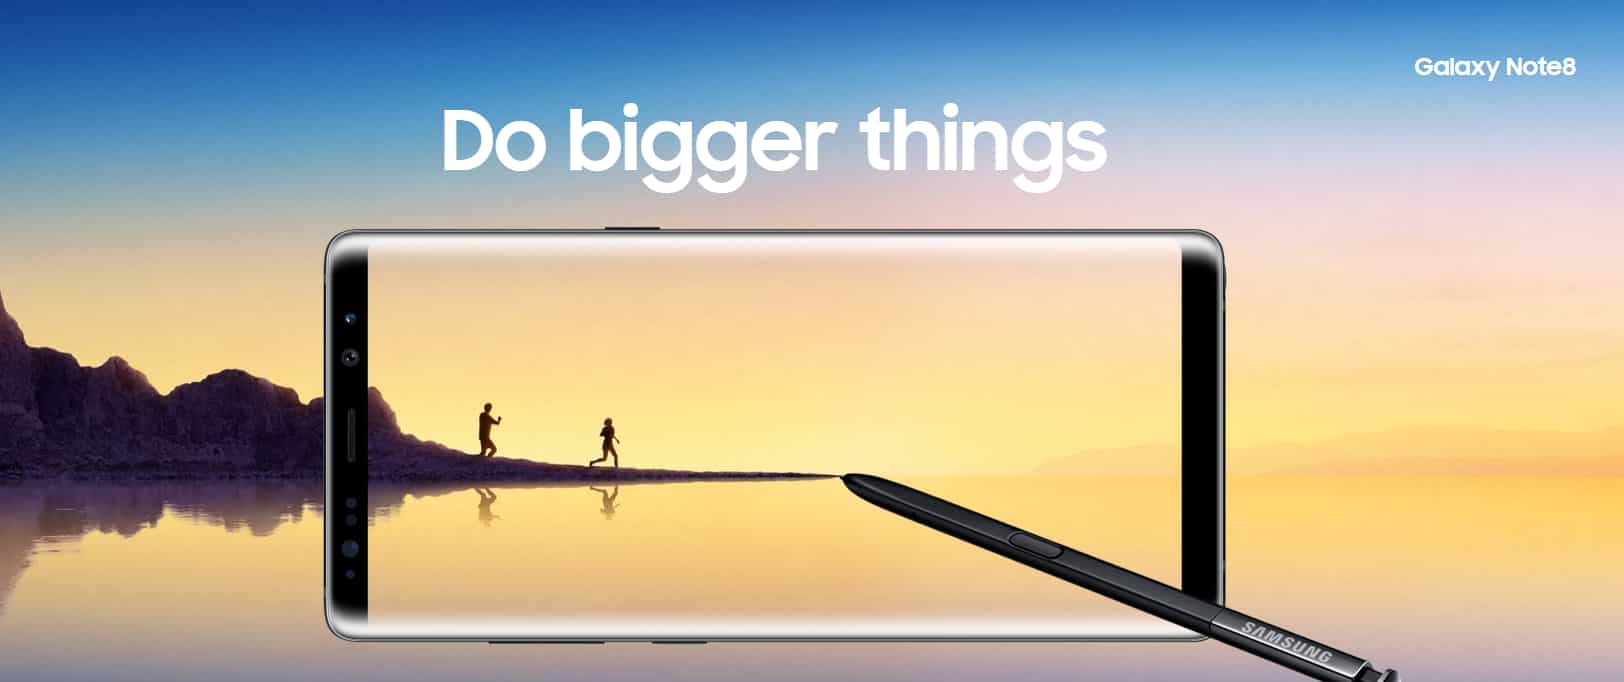 4. Samsung Galaxy Note 8- 